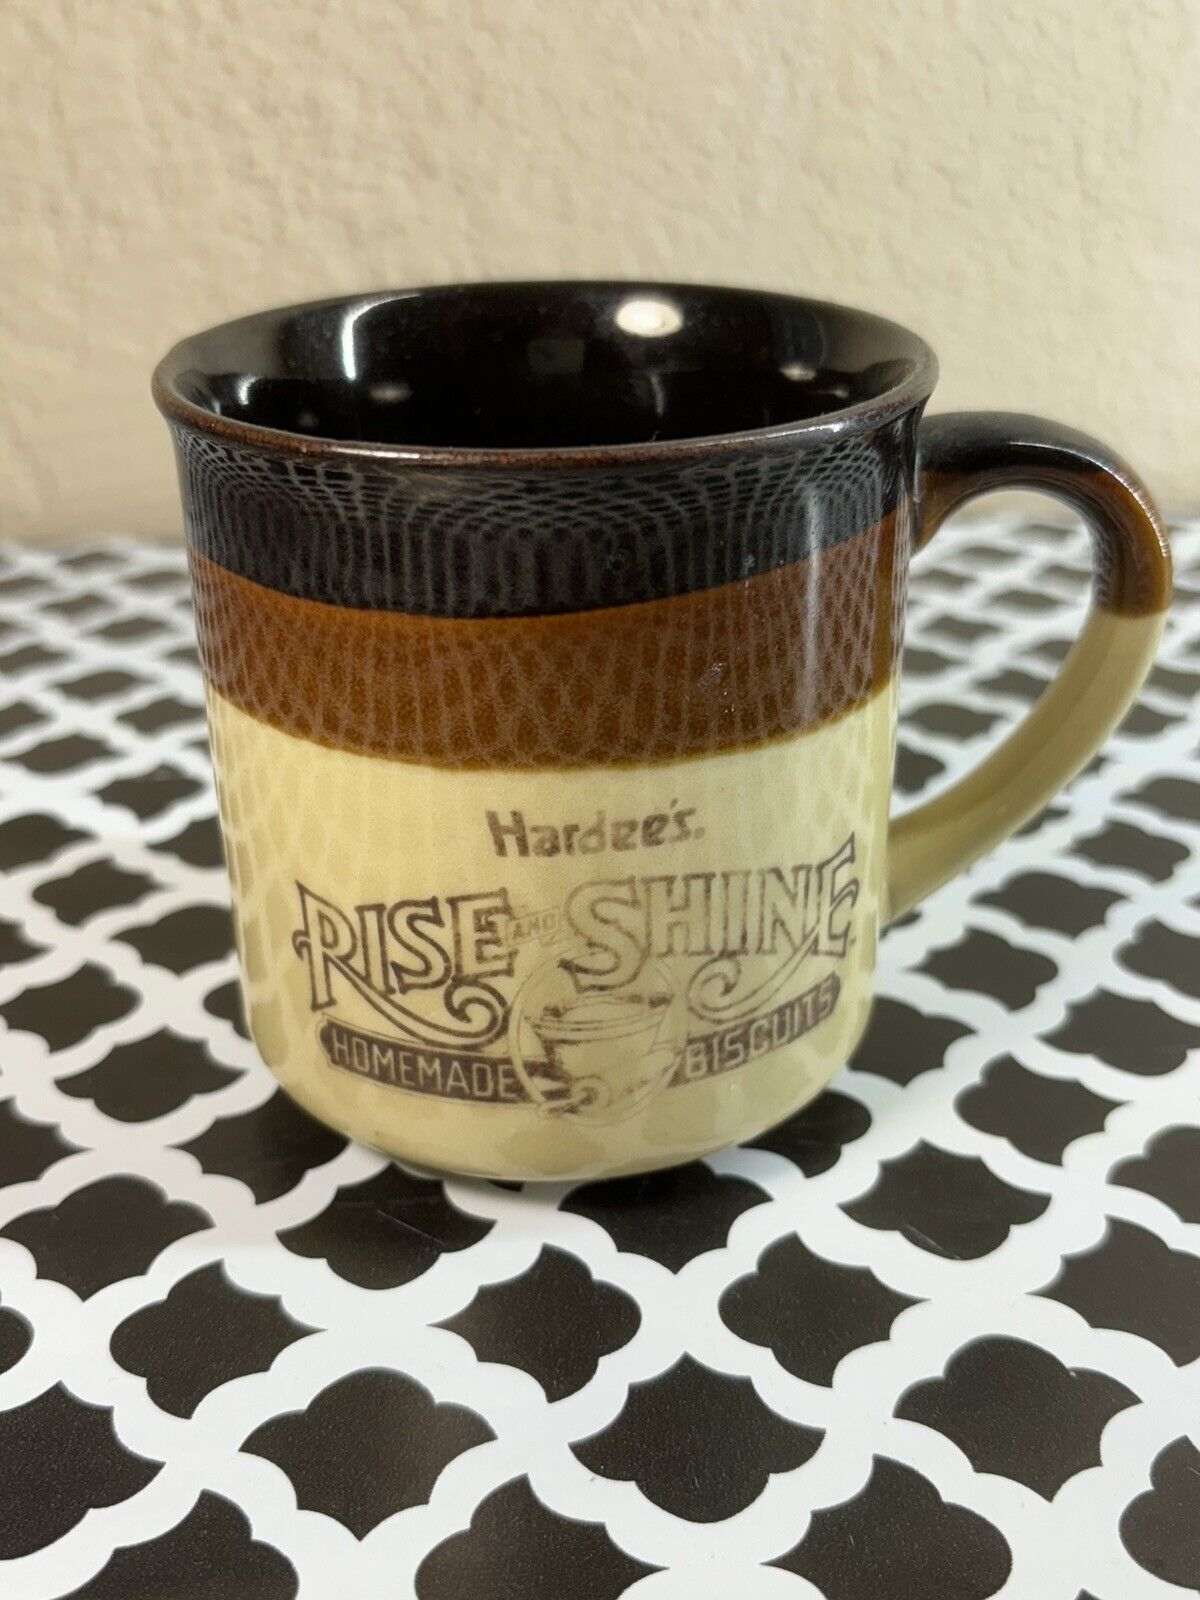 Hardee's Rise and Shine Homemade Biscuits Coffee Mug 1986 Vintage